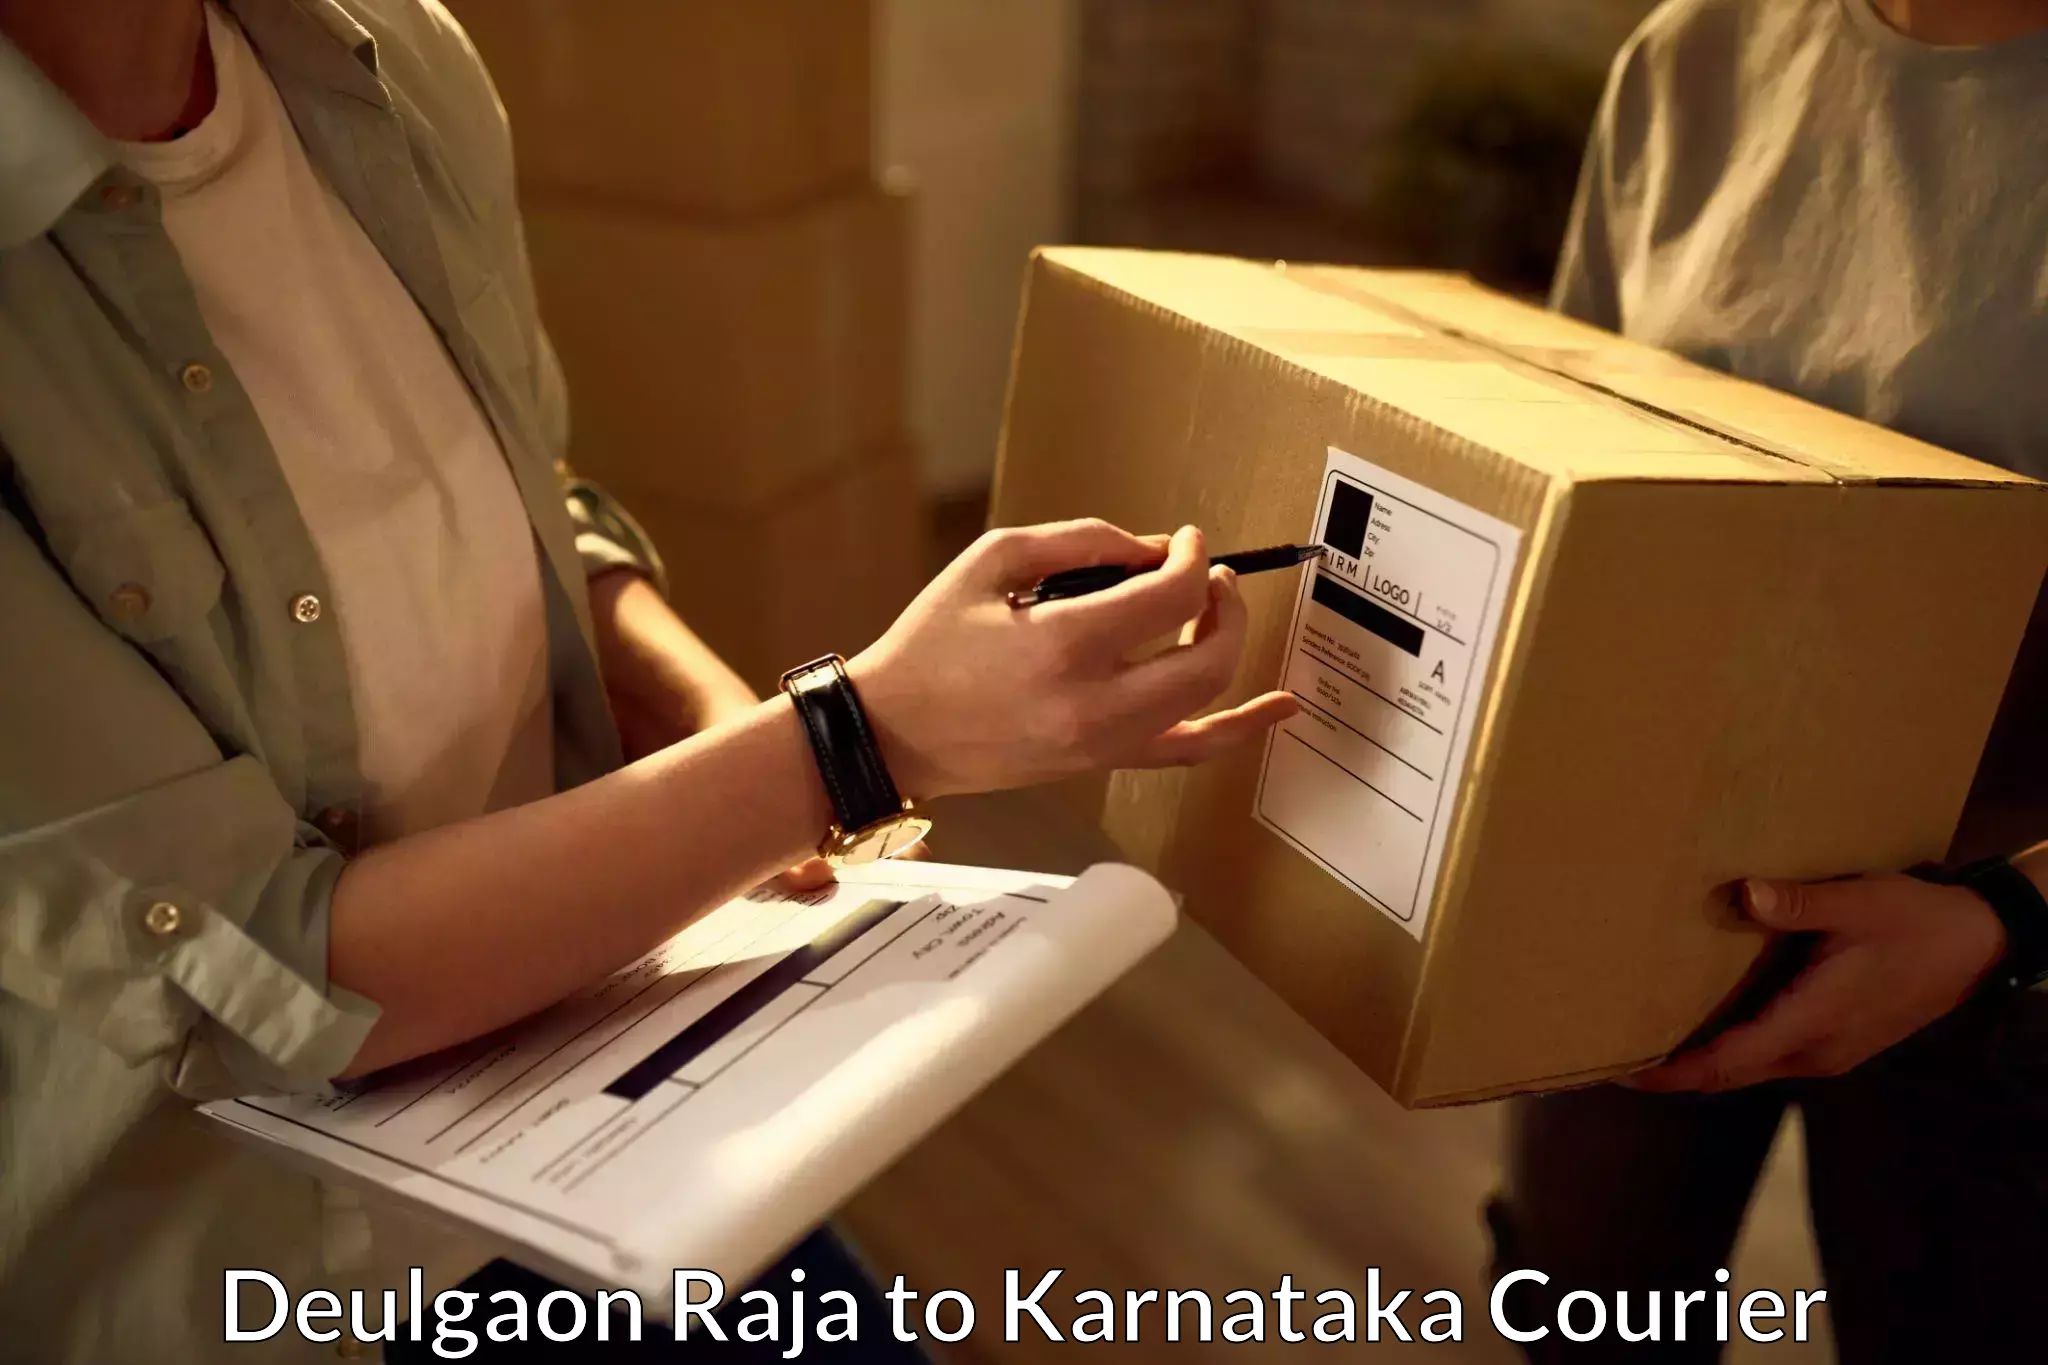 Courier service innovation Deulgaon Raja to Hirekerur